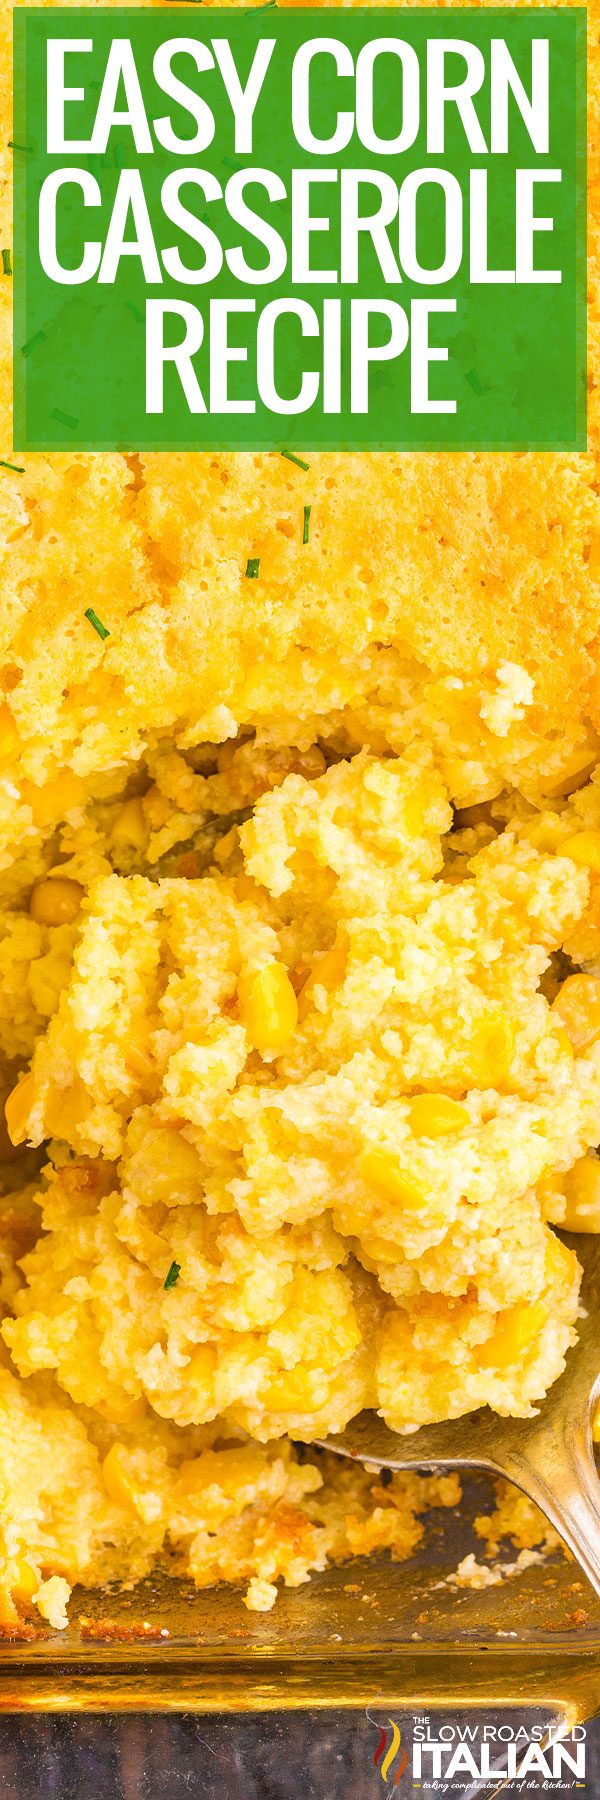 titled image (and shown): Jiffy cornbread casserole